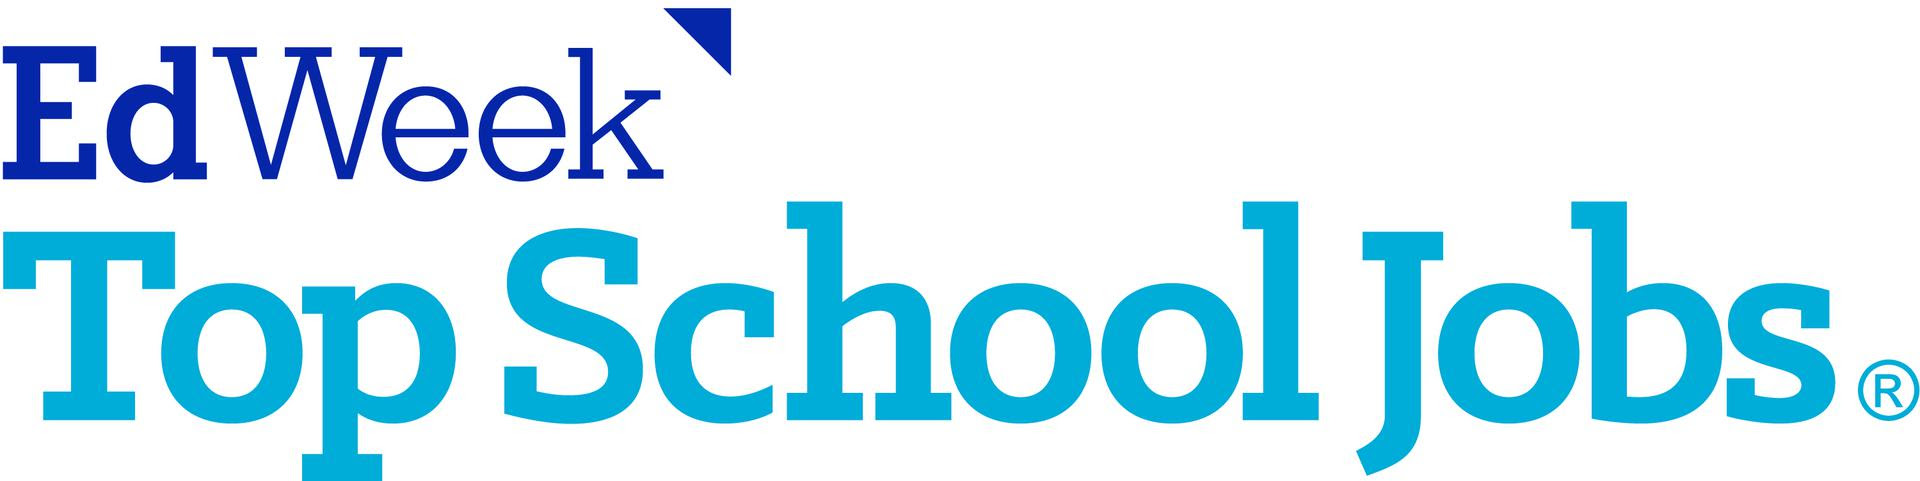 EdWeek Top School Jobs logo